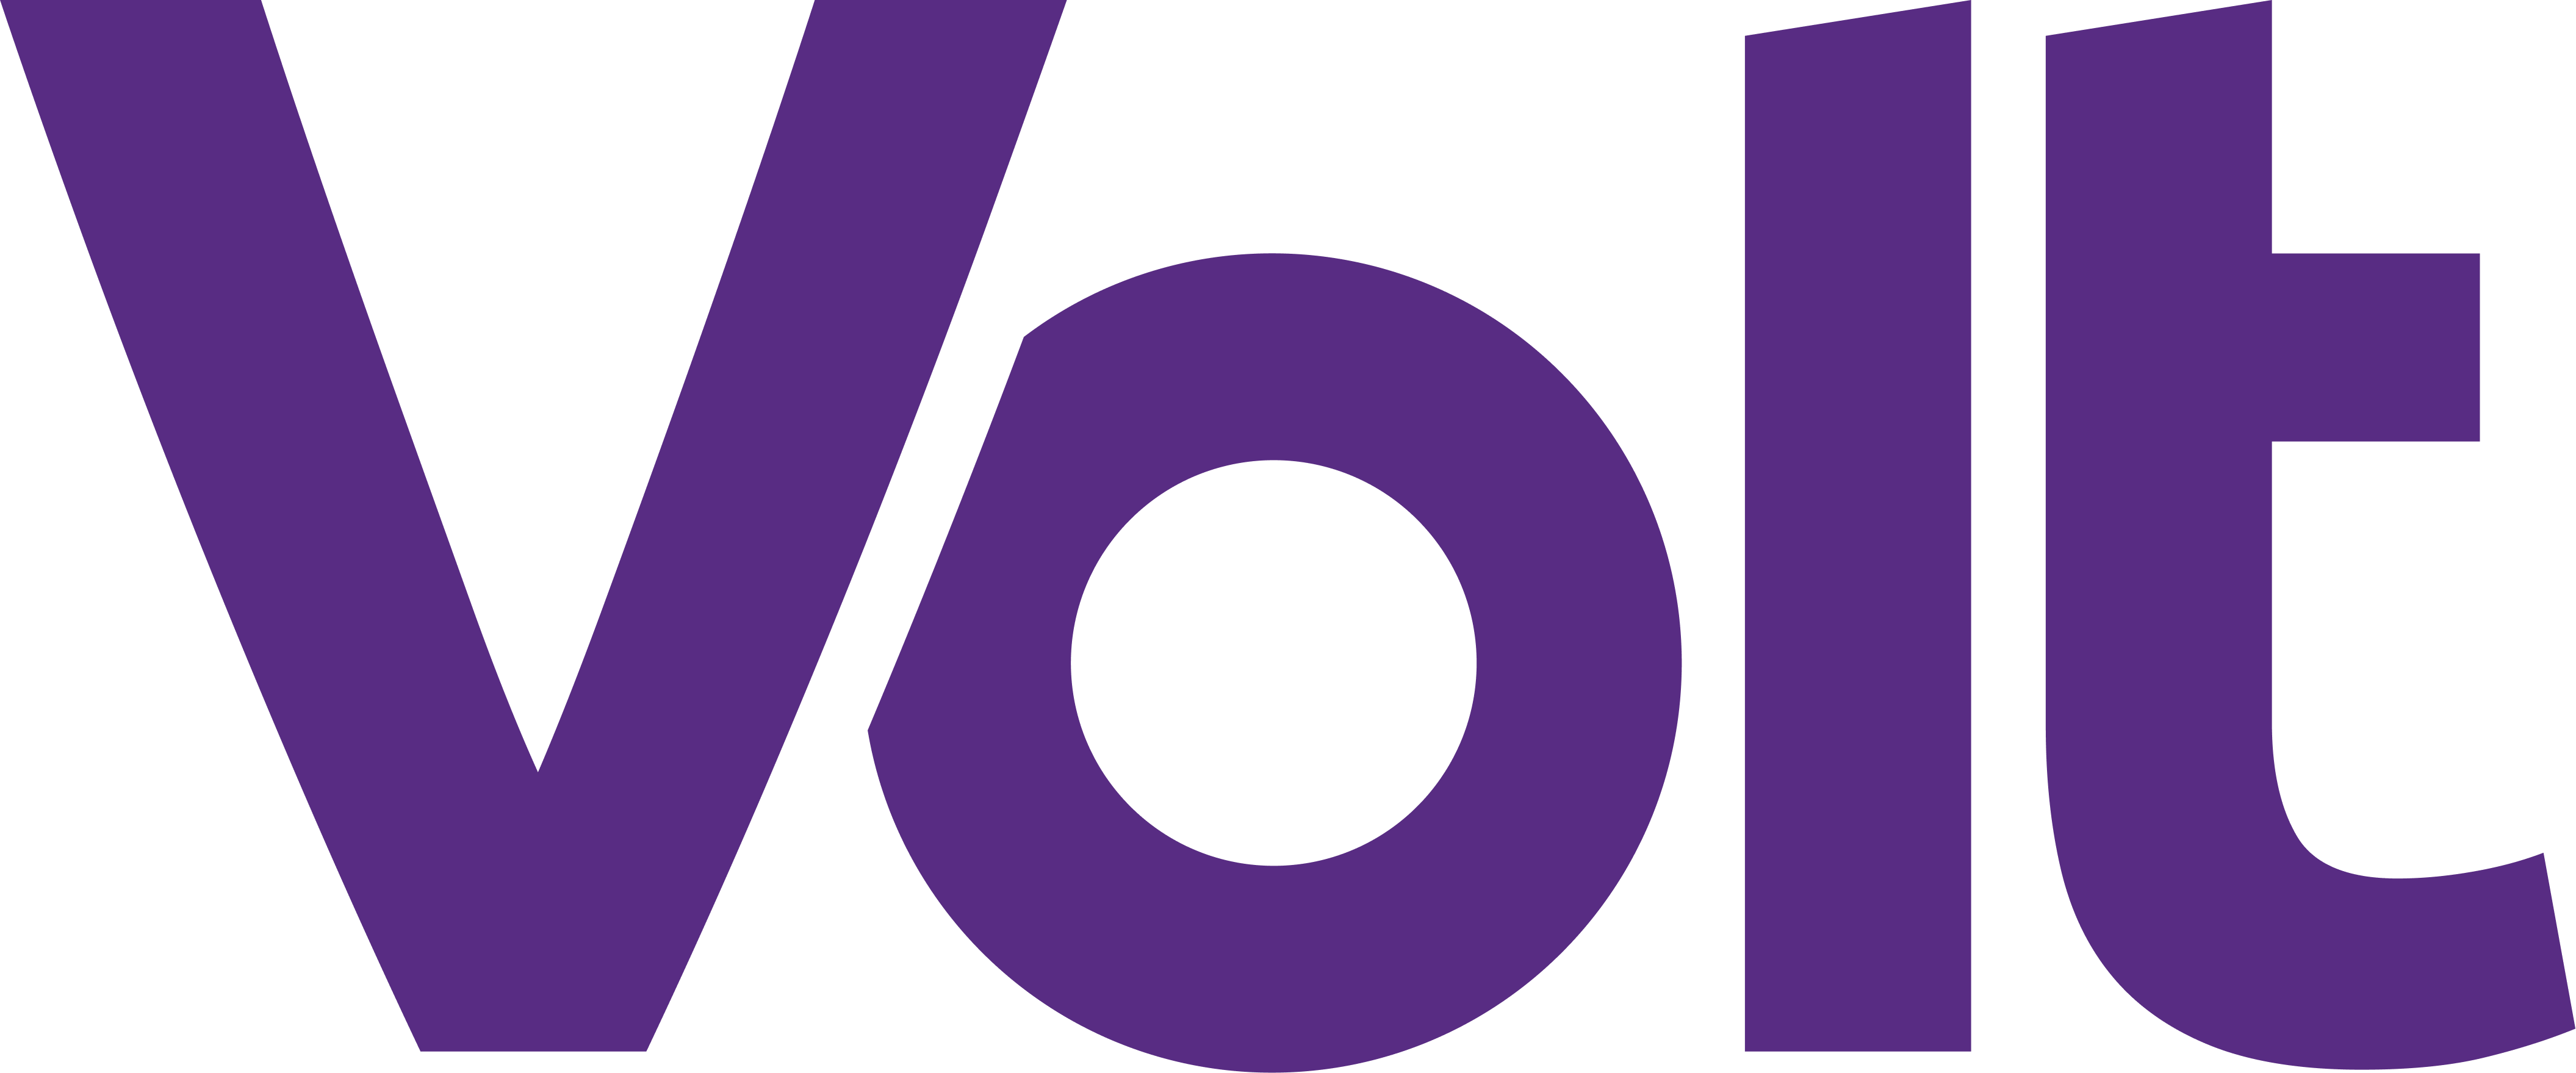 Huidige logo